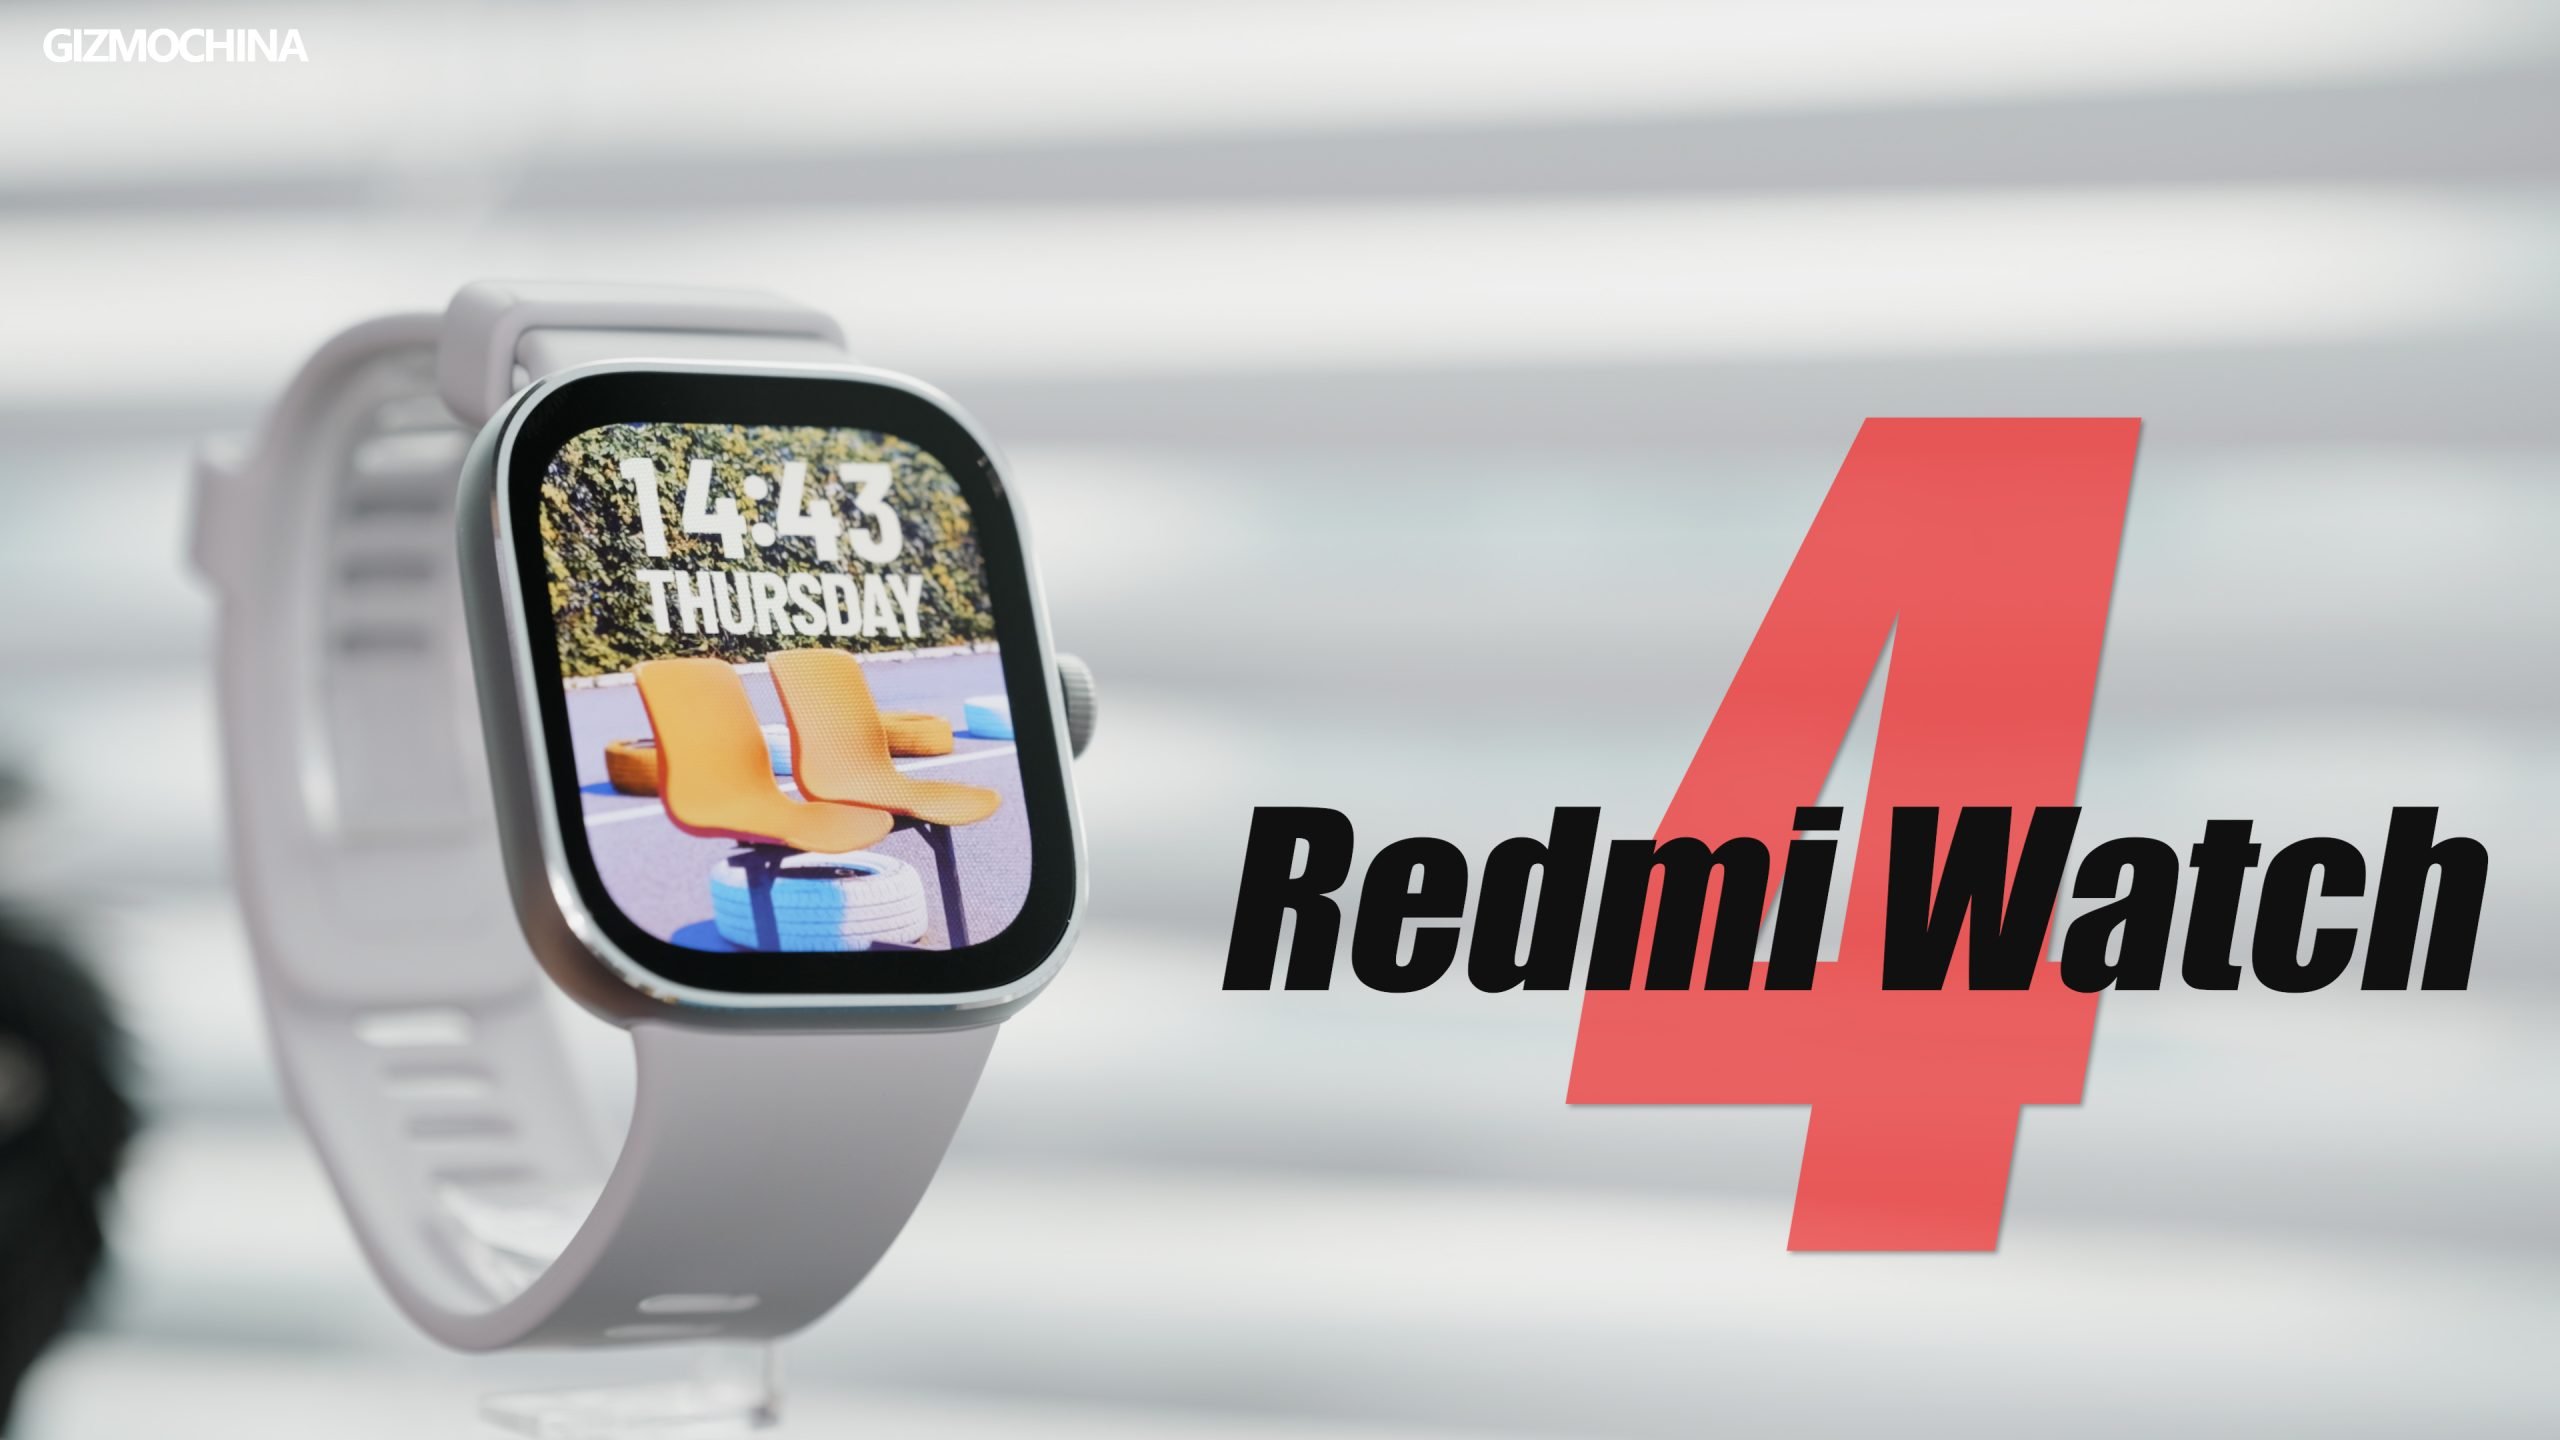 Redmi Watch 4 Full Review: the BEST Redmi Watch So Far! 